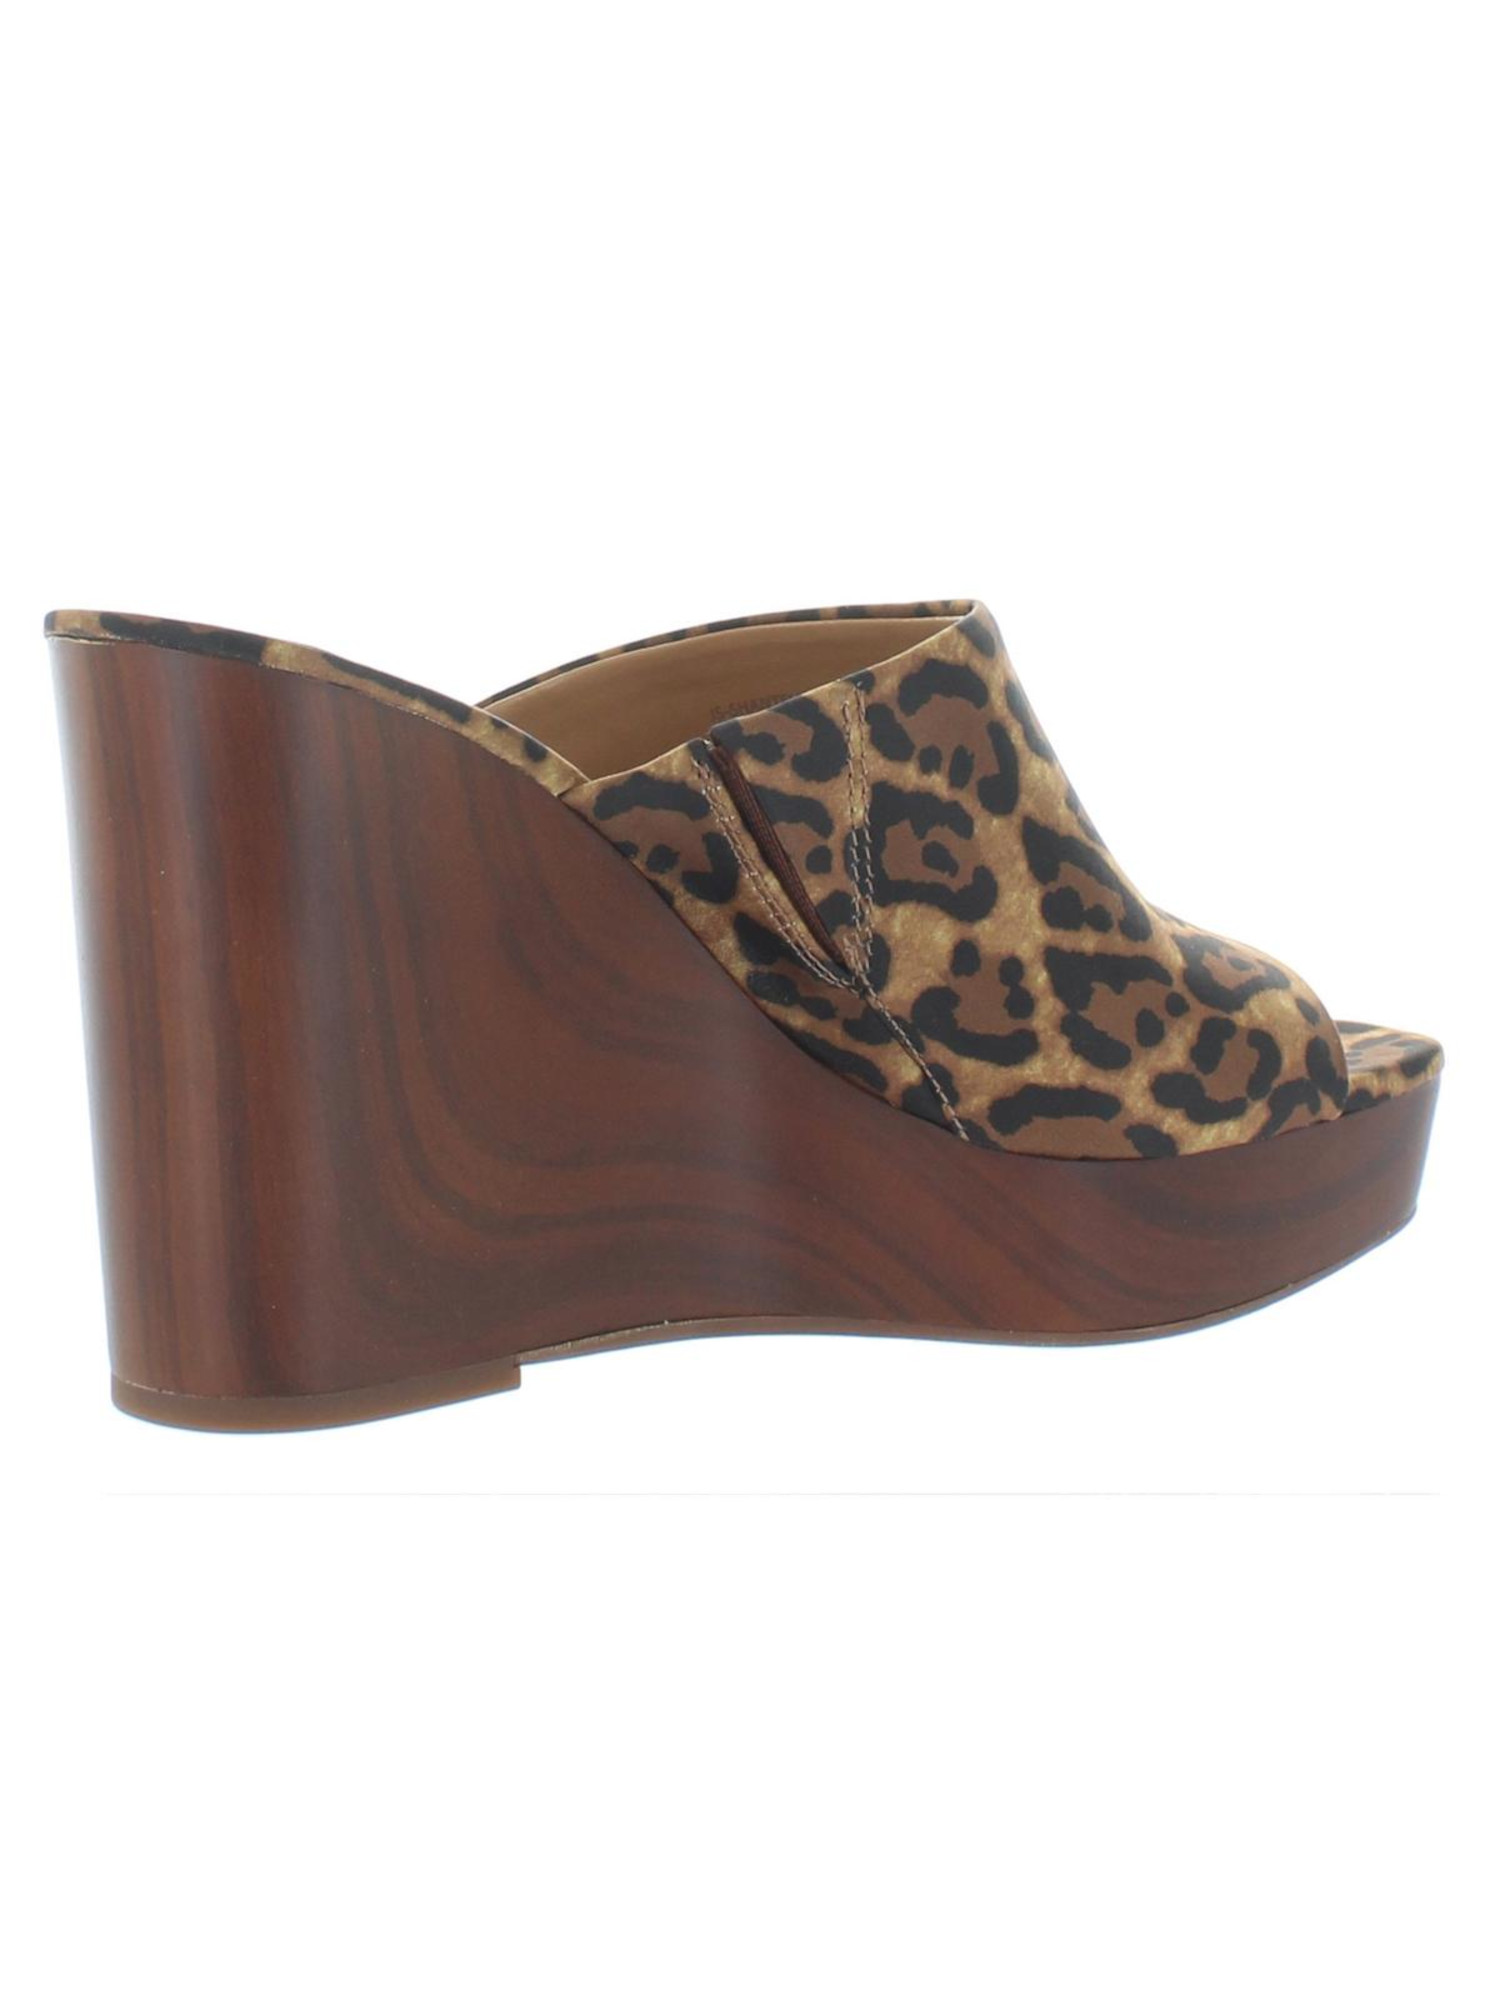 JESSICA SIMPSON Womens Brown Animal Print Leopard Comfort Shantelle Square Toe Slip On Slide Sandals 9.5 M